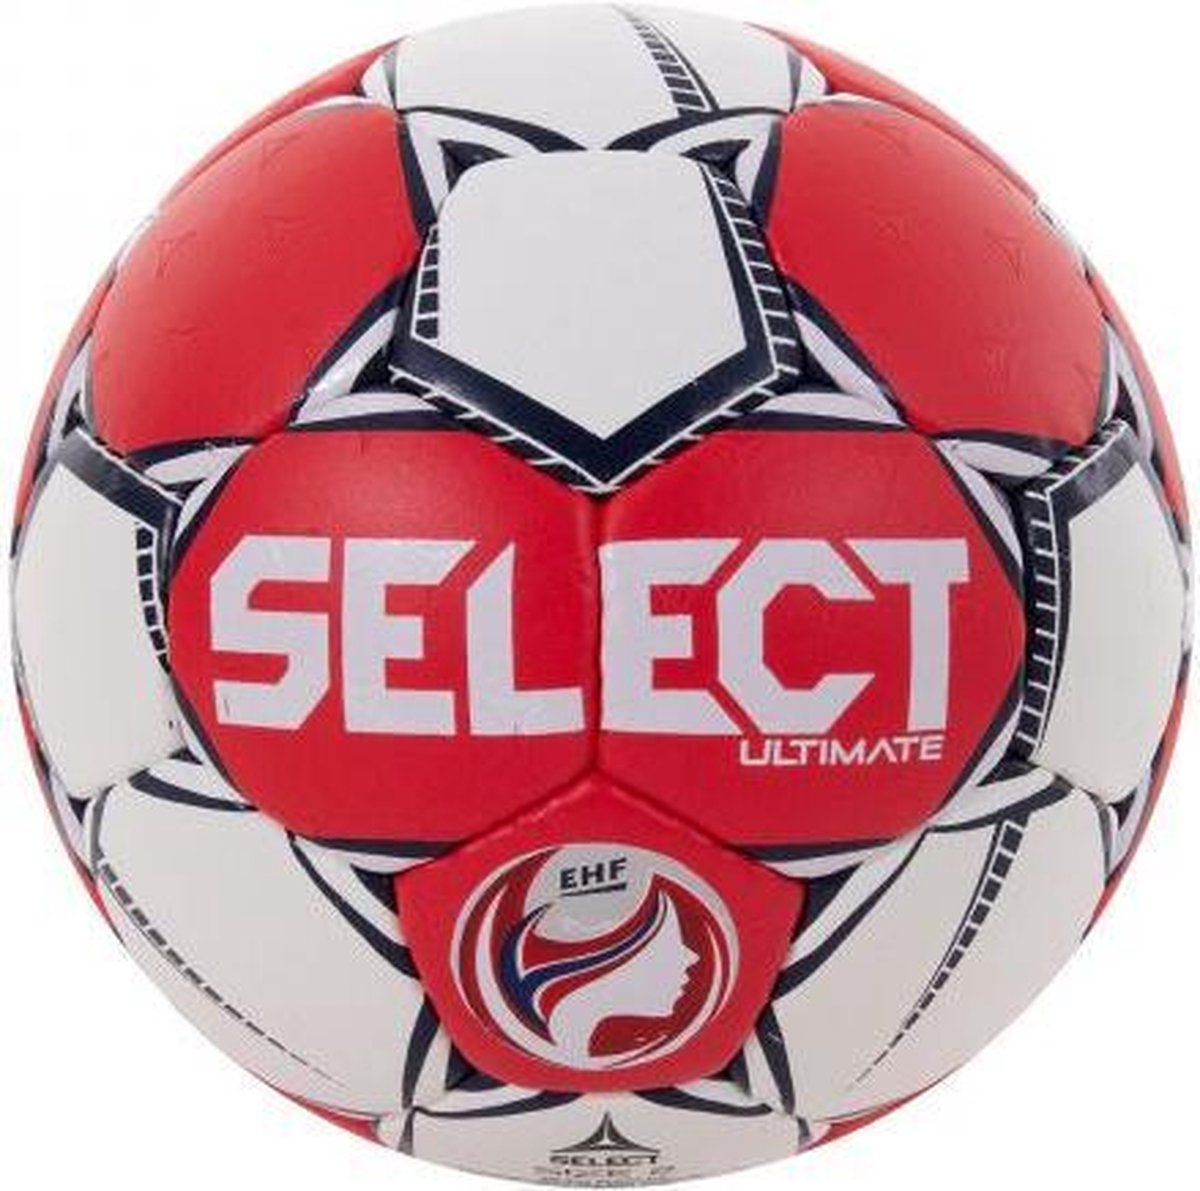 Select Ultimate EHF Euro 2020 Handbal Voetbal Dames - Maat 2